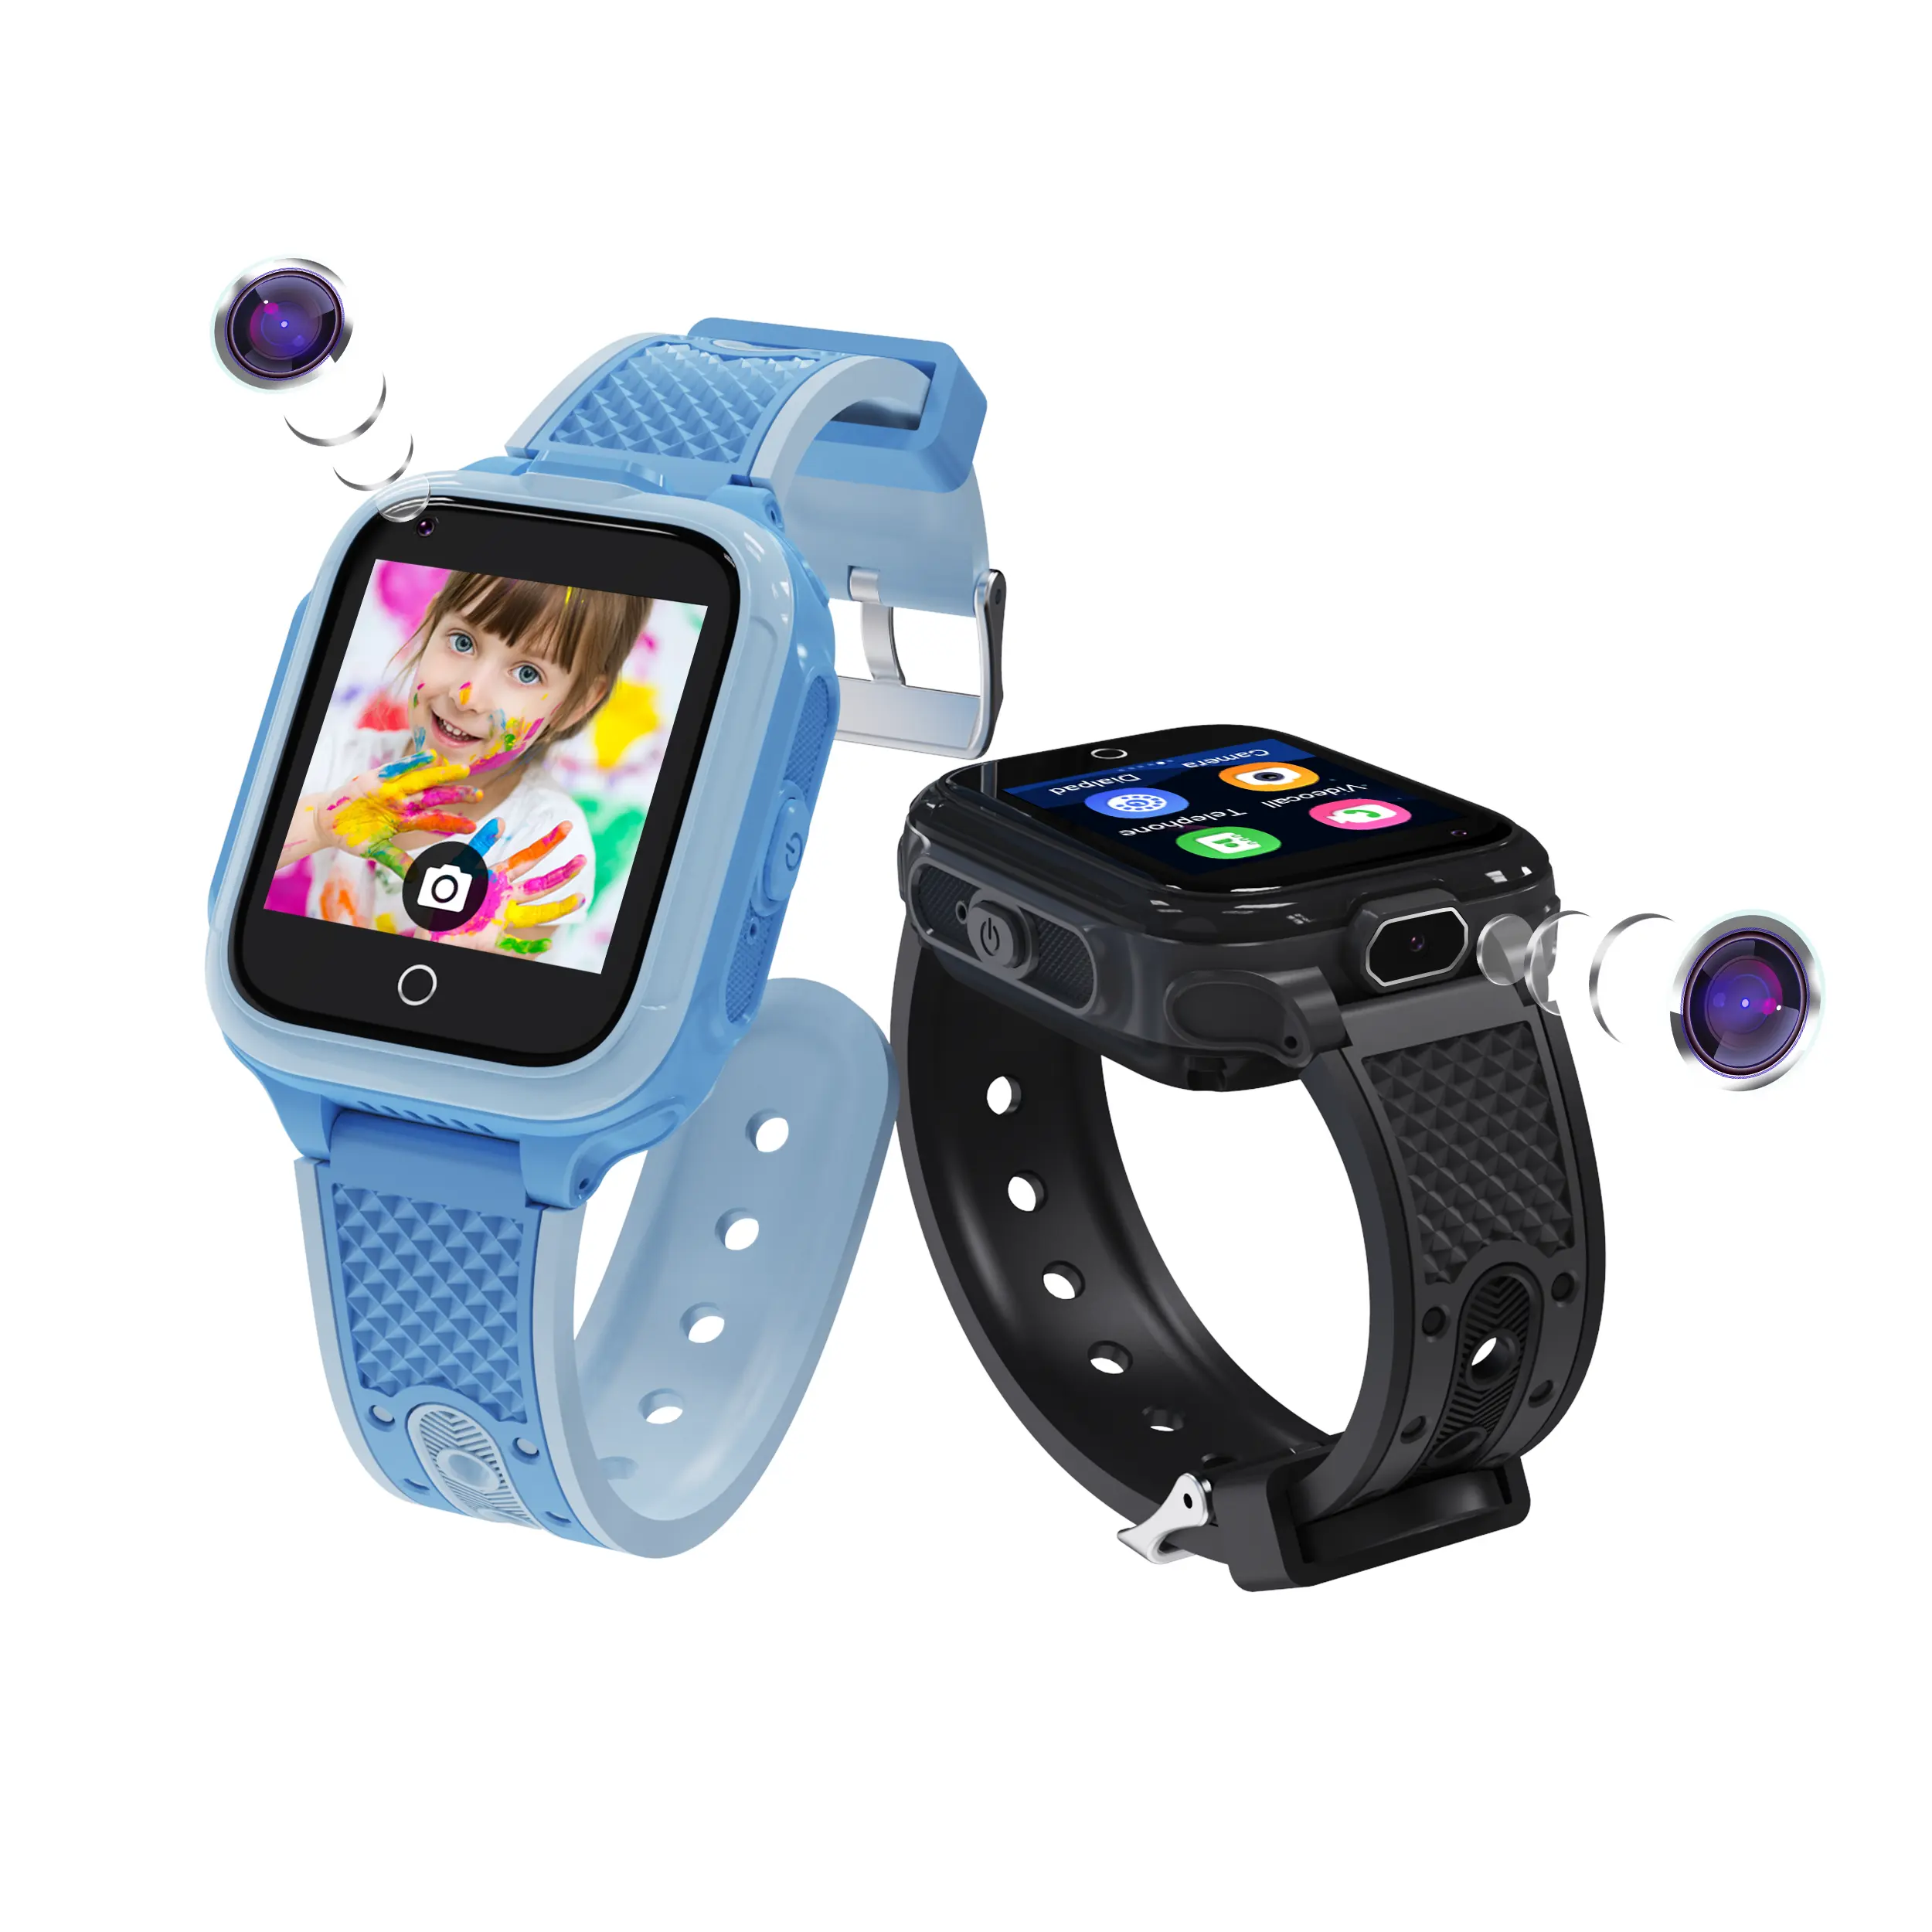 New Dual Cameras Kids GPS Smart Watch Call Sos Video Calling Games Voice Chat Alarm Ip67 Waterproof Baby Smart Watch Phone